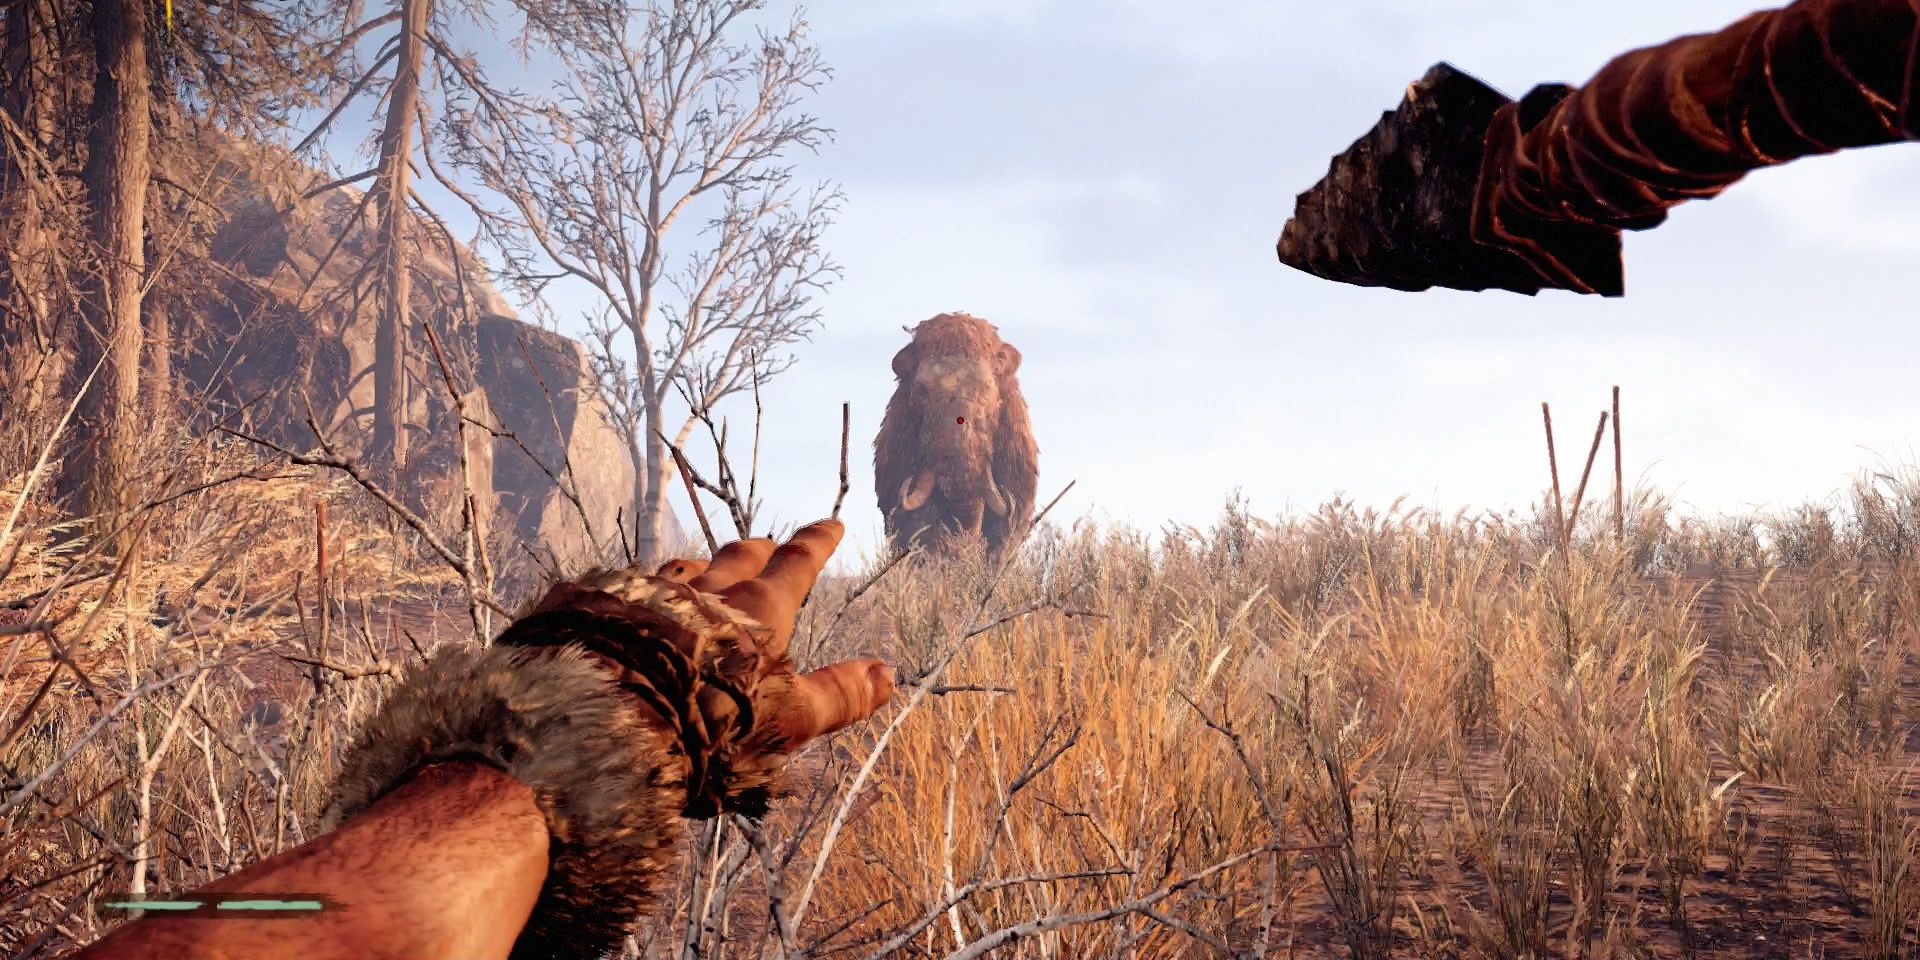 Takkar aims a spear at an incoming woolly mammoth in Far Cry.